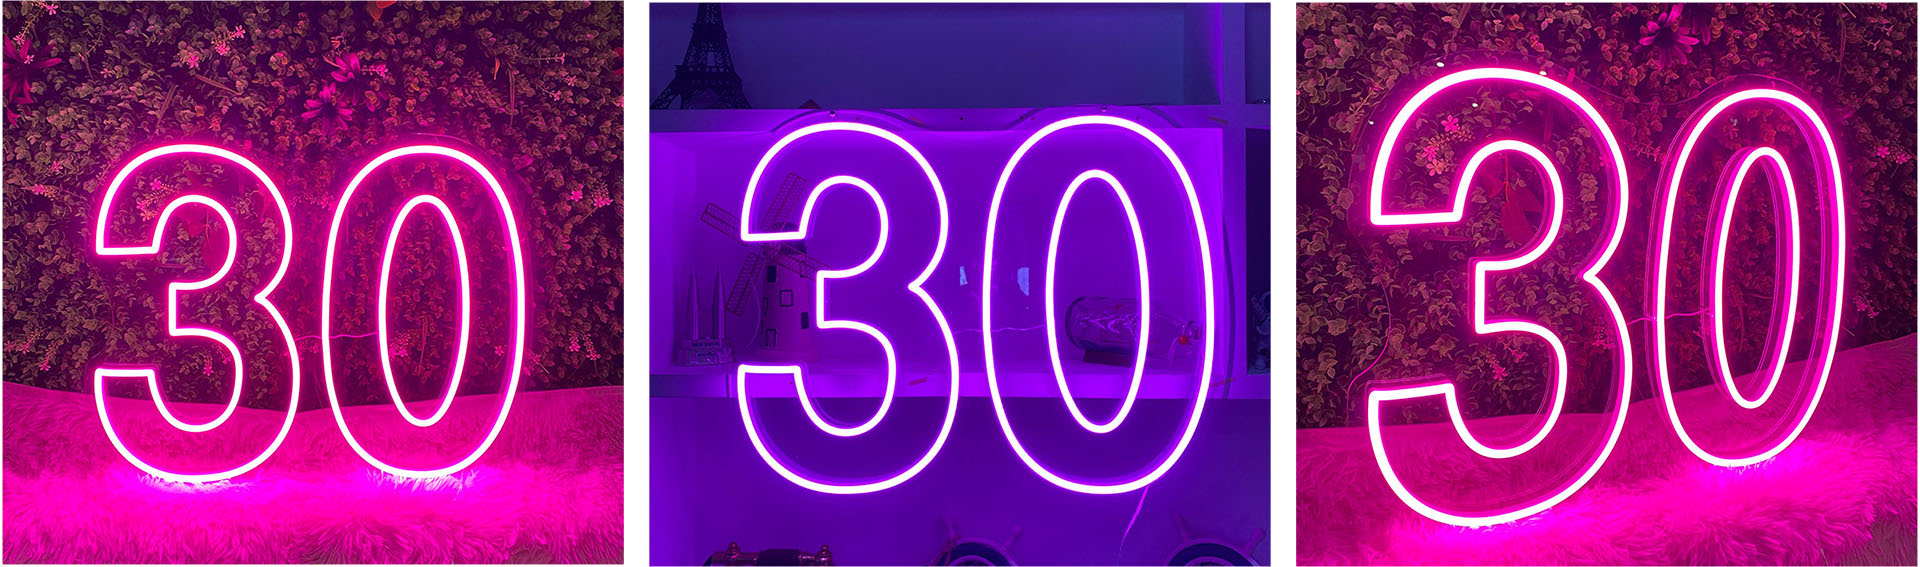 30th birthday neon sign